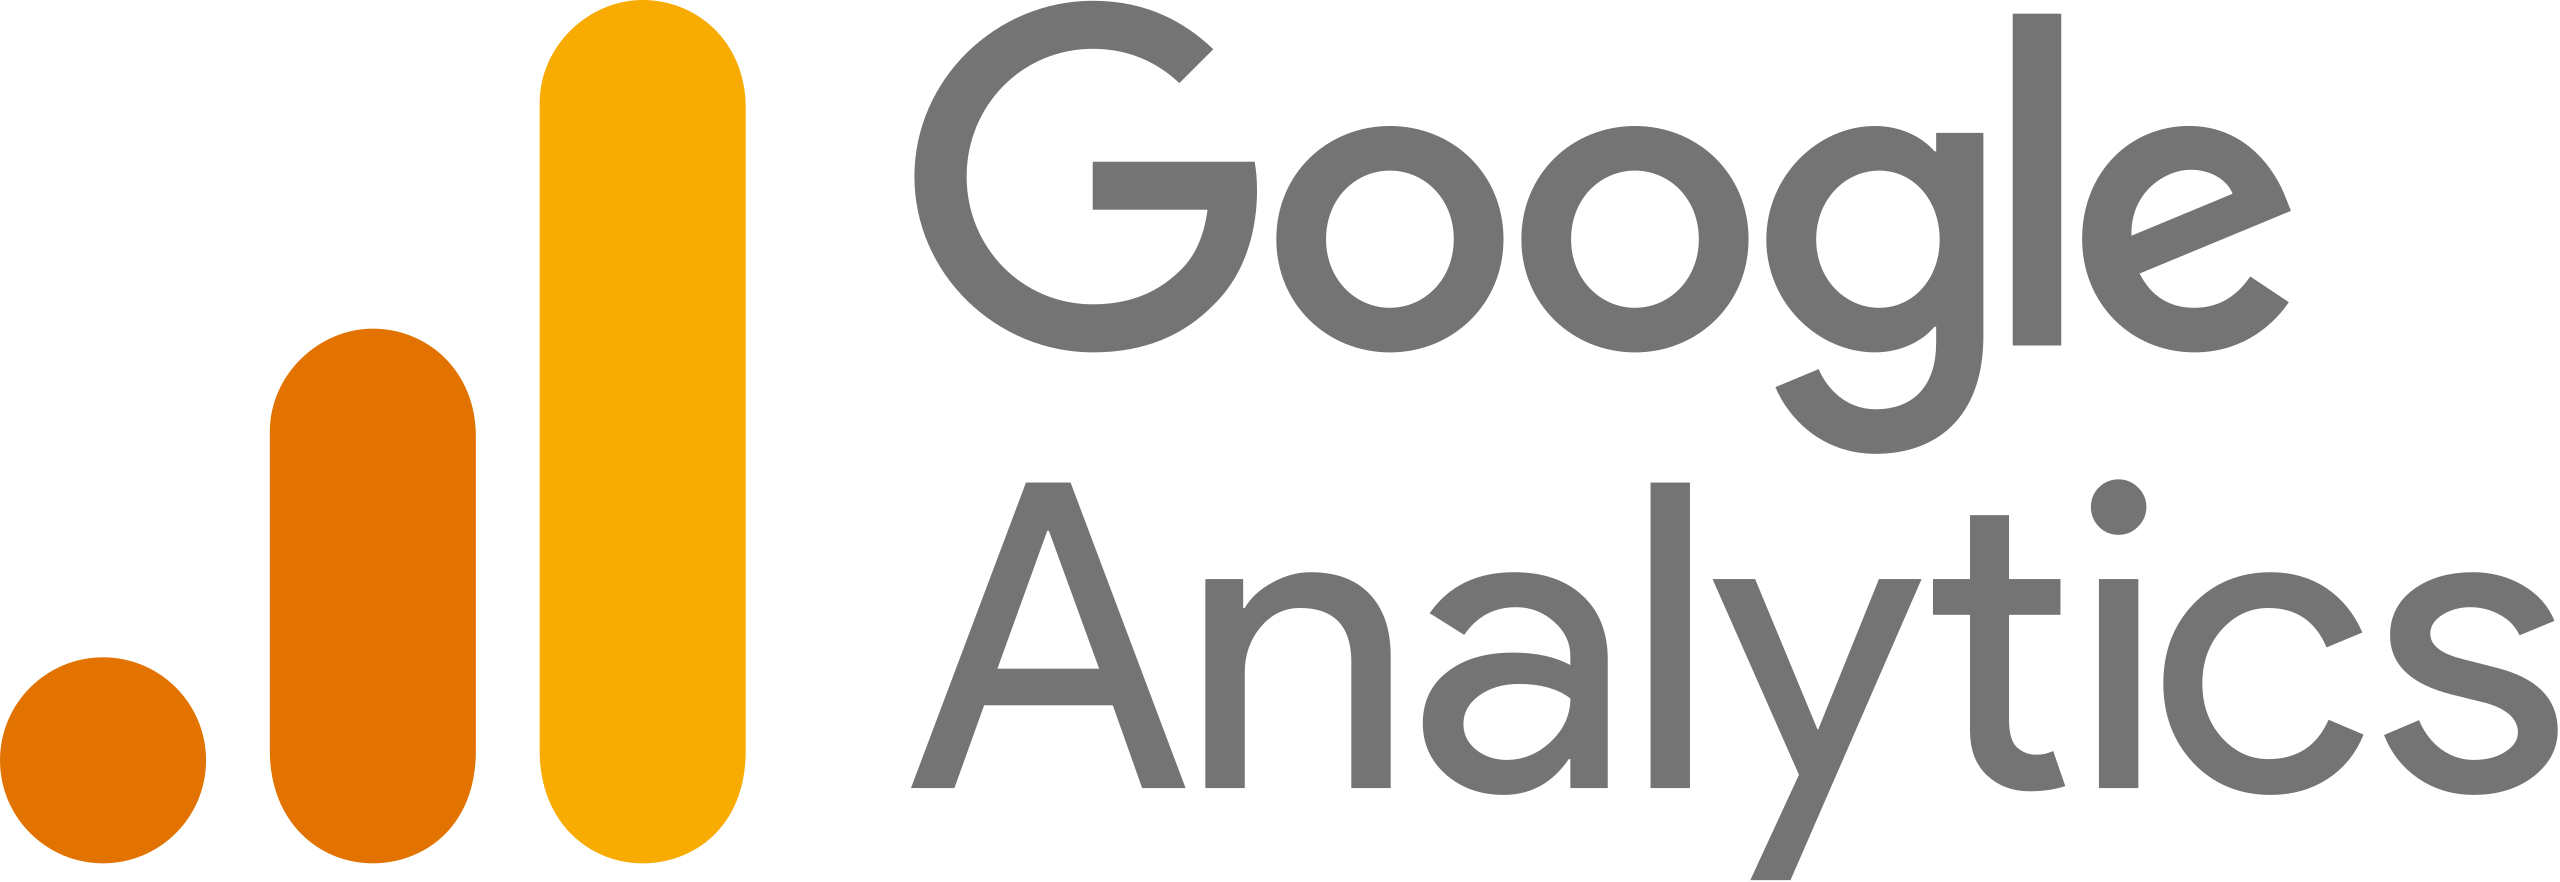 Google Analytics website analytics